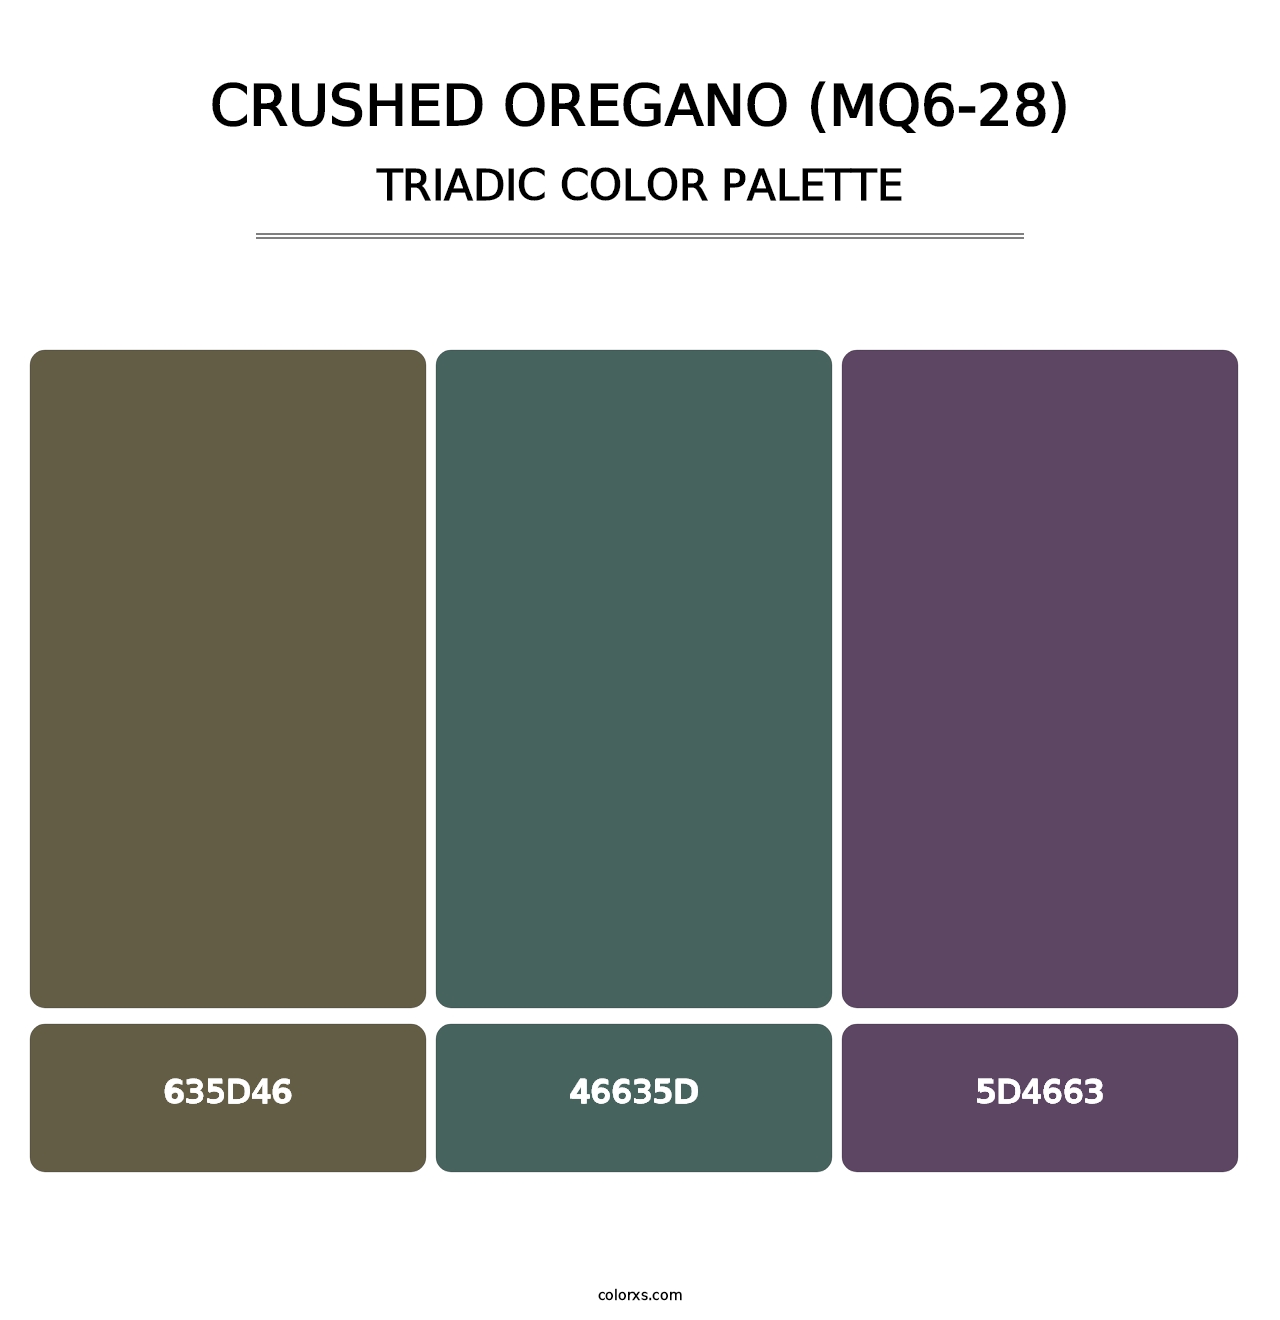 Crushed Oregano (MQ6-28) - Triadic Color Palette